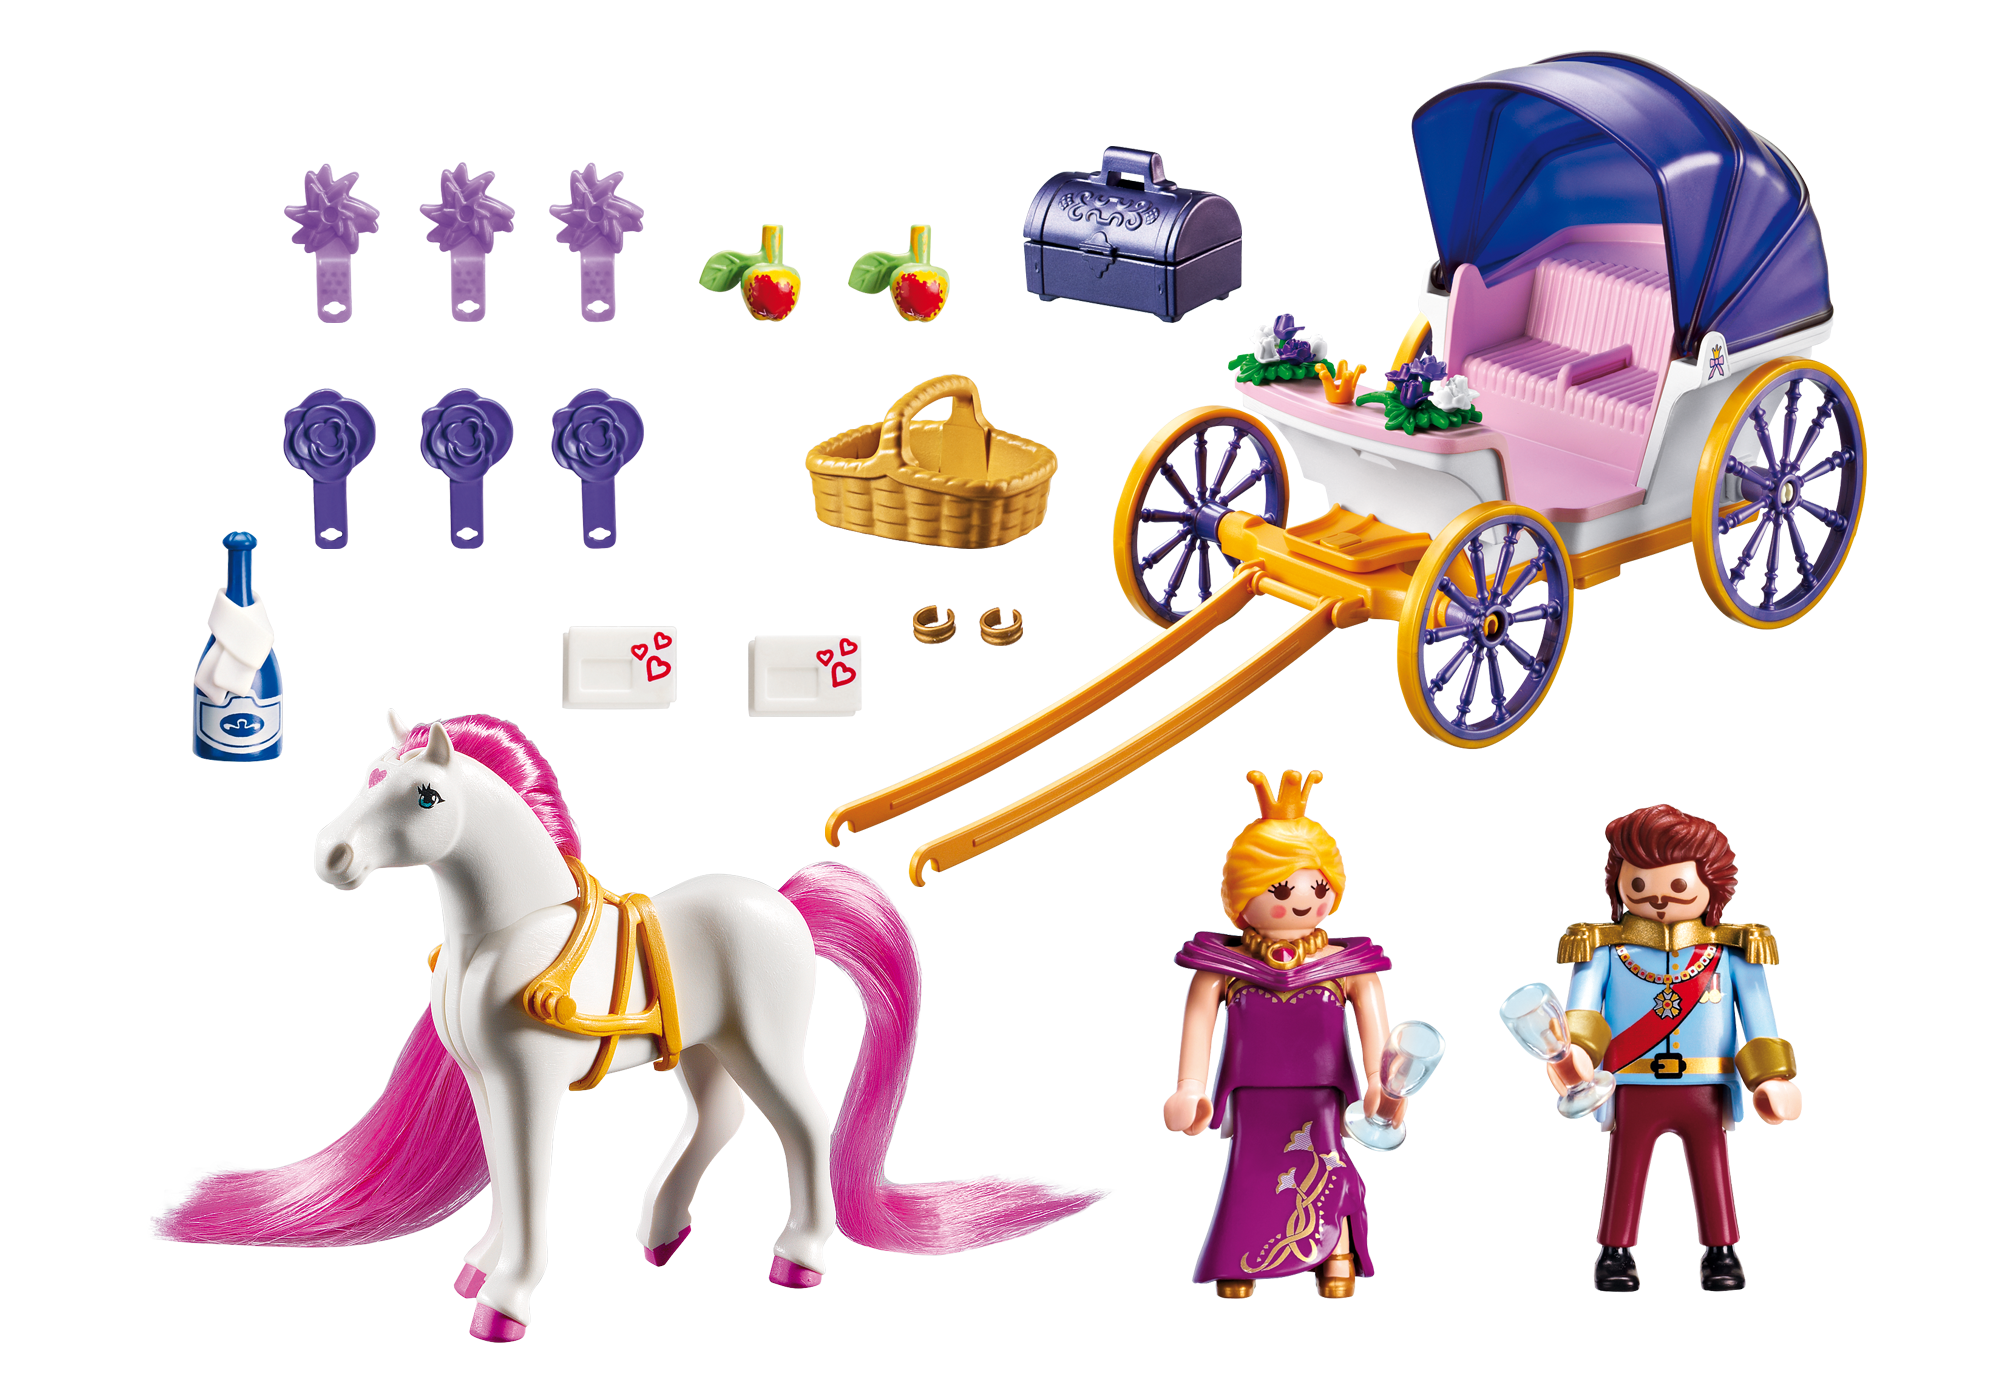 caleche playmobil princesse 4258